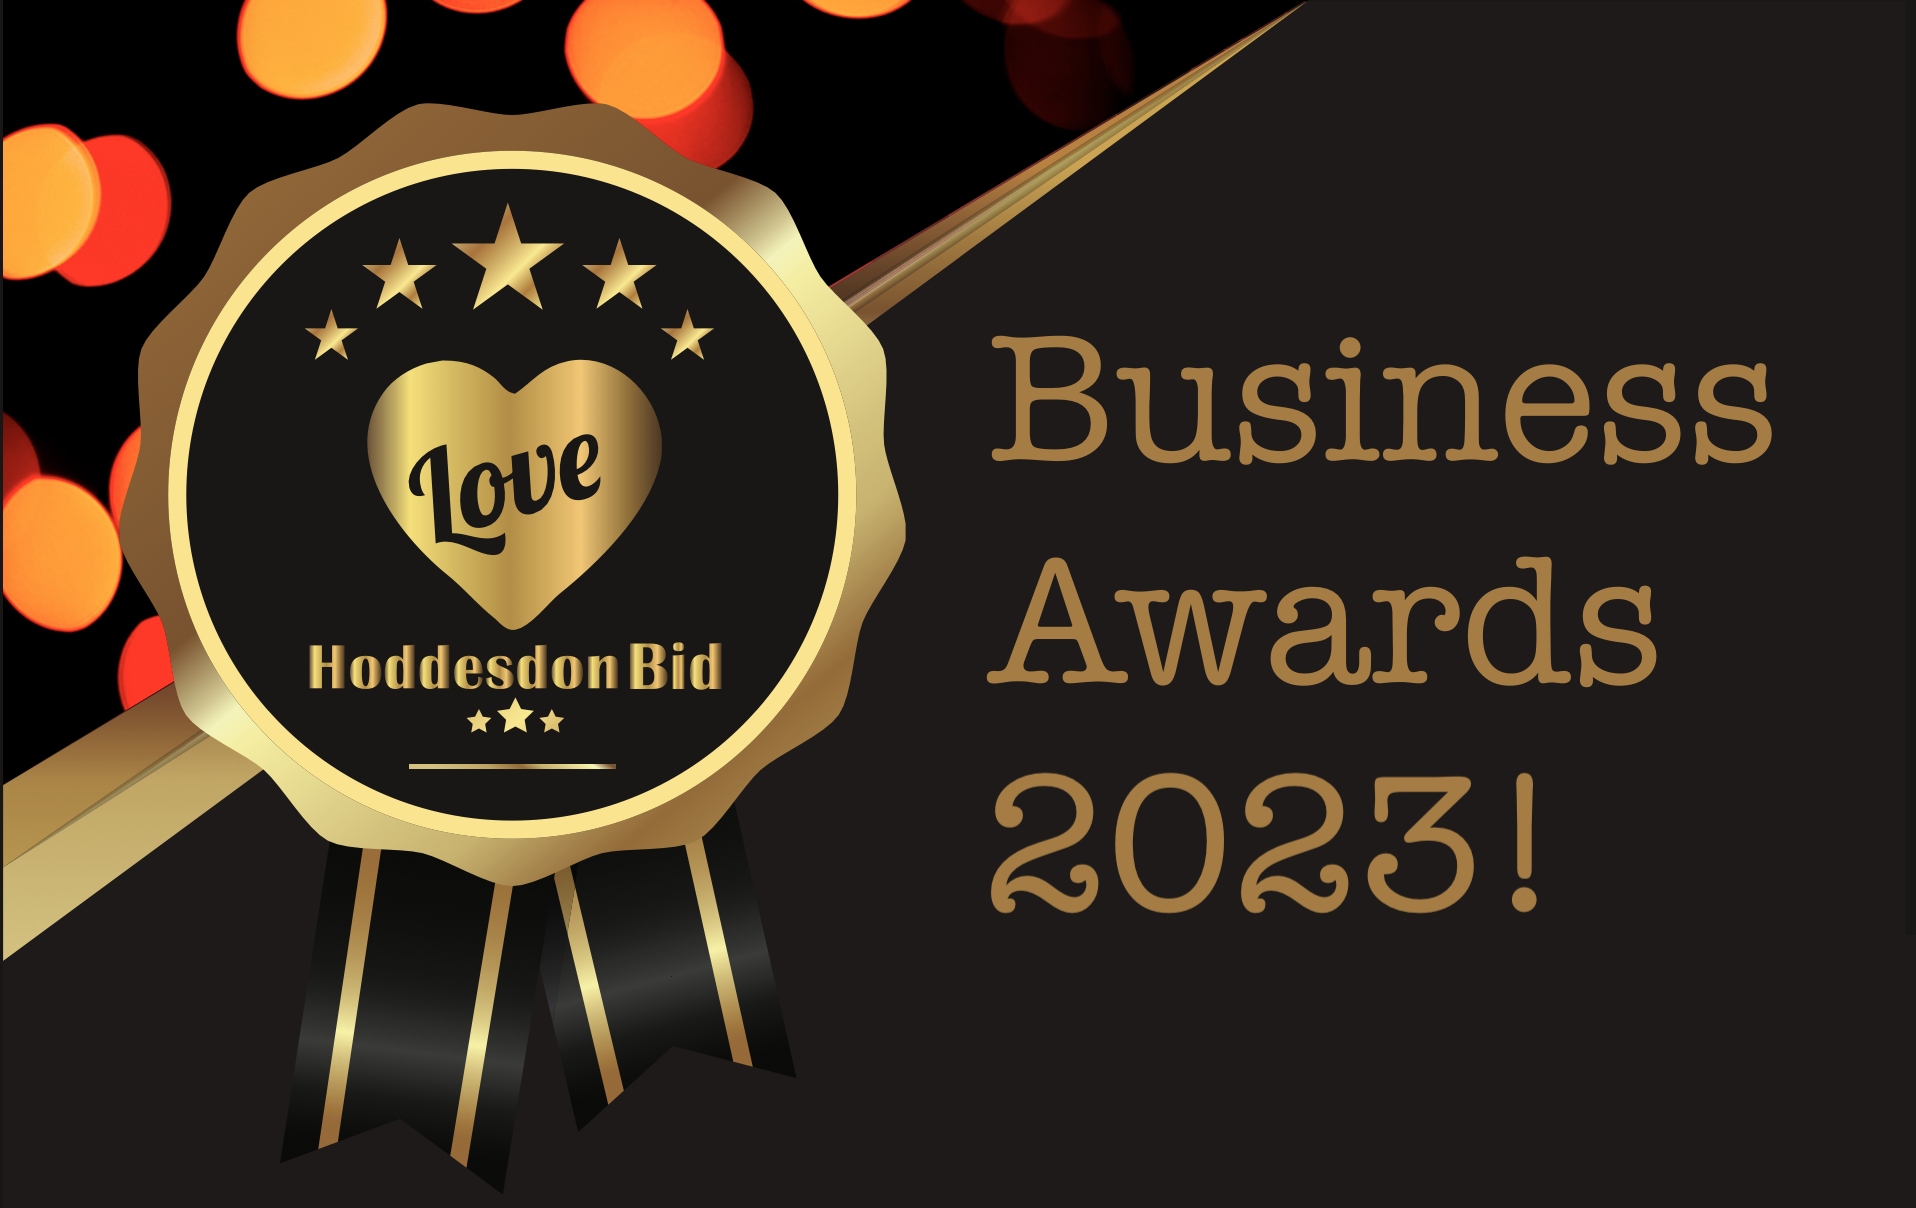 Love Hoddesdon Business Awards 2022!